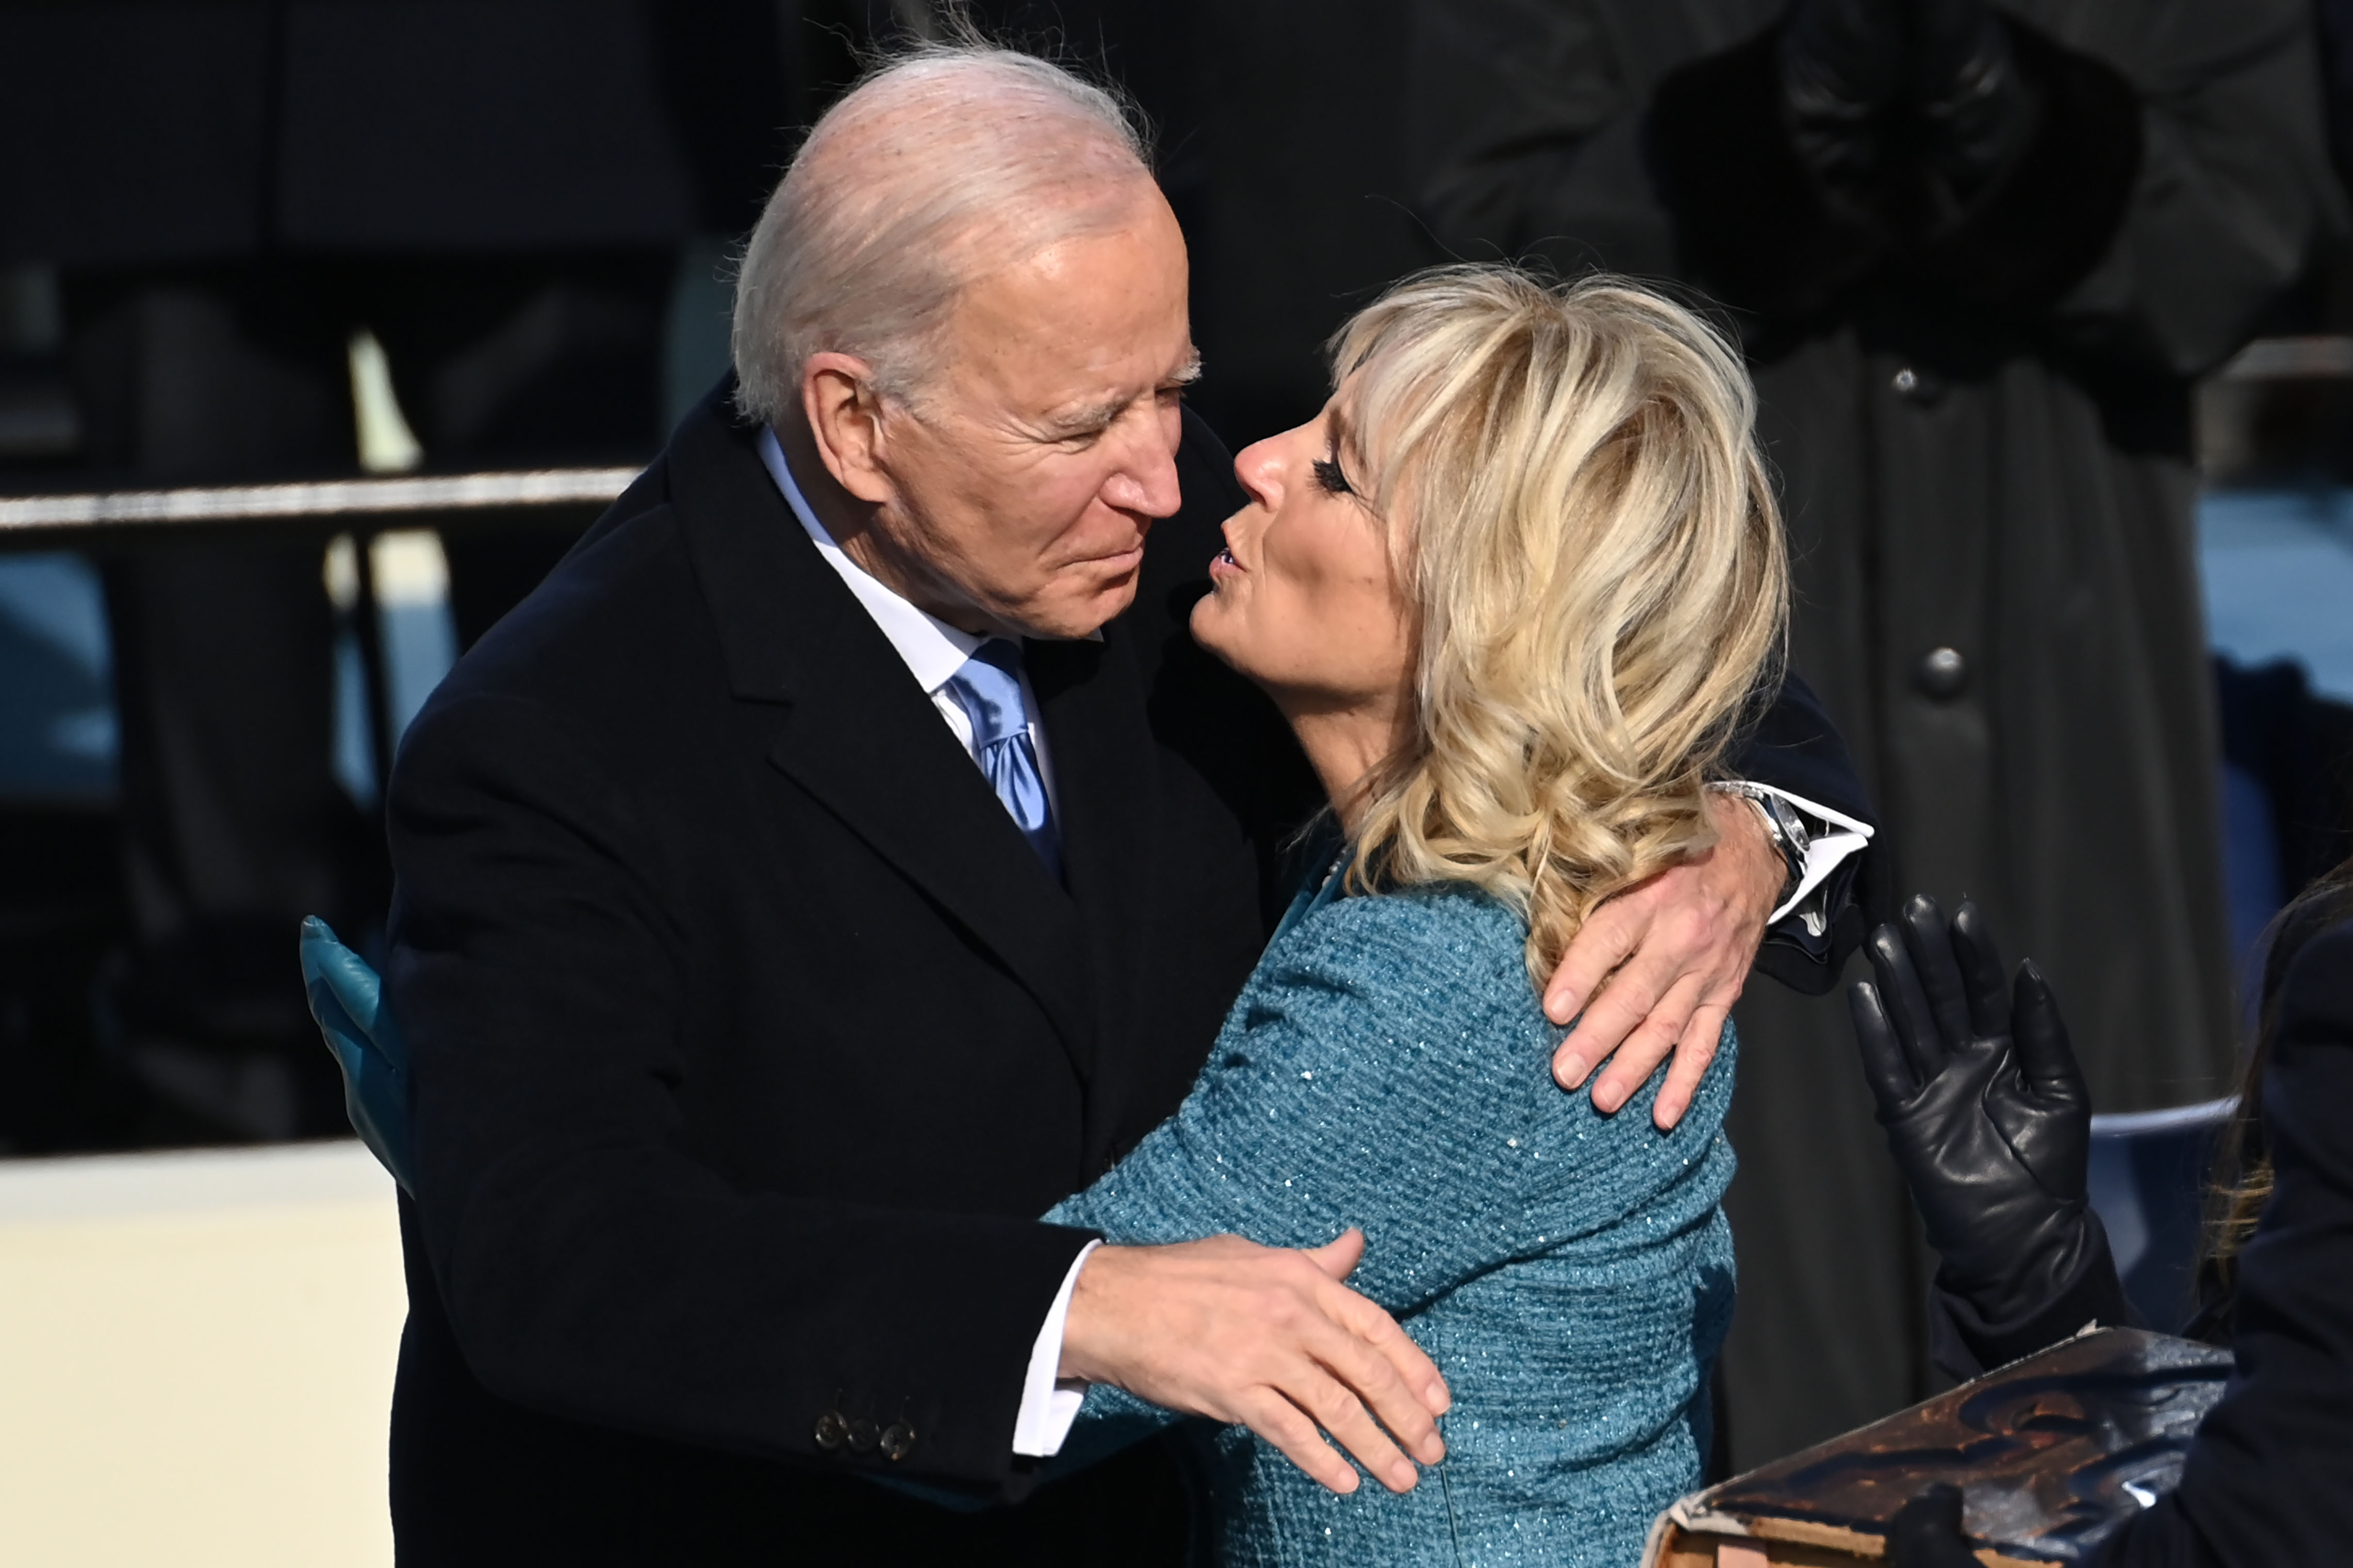 Joe and Jill Biden at the inauguration |  Saul Loeb - Pool/Getty Images